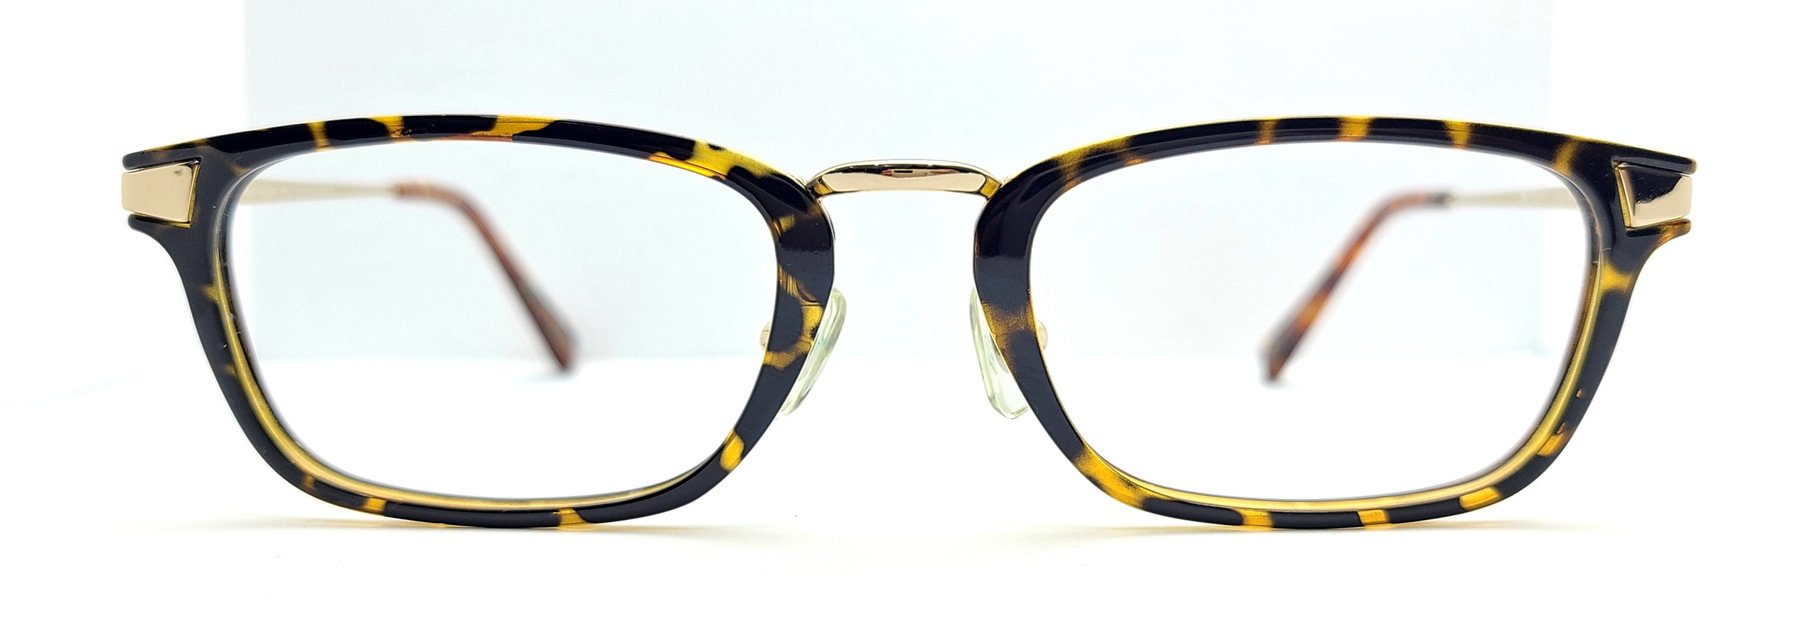 MINIHOUSE M-1209-1, Korean glasses, sunglasses, eyeglasses, glasses